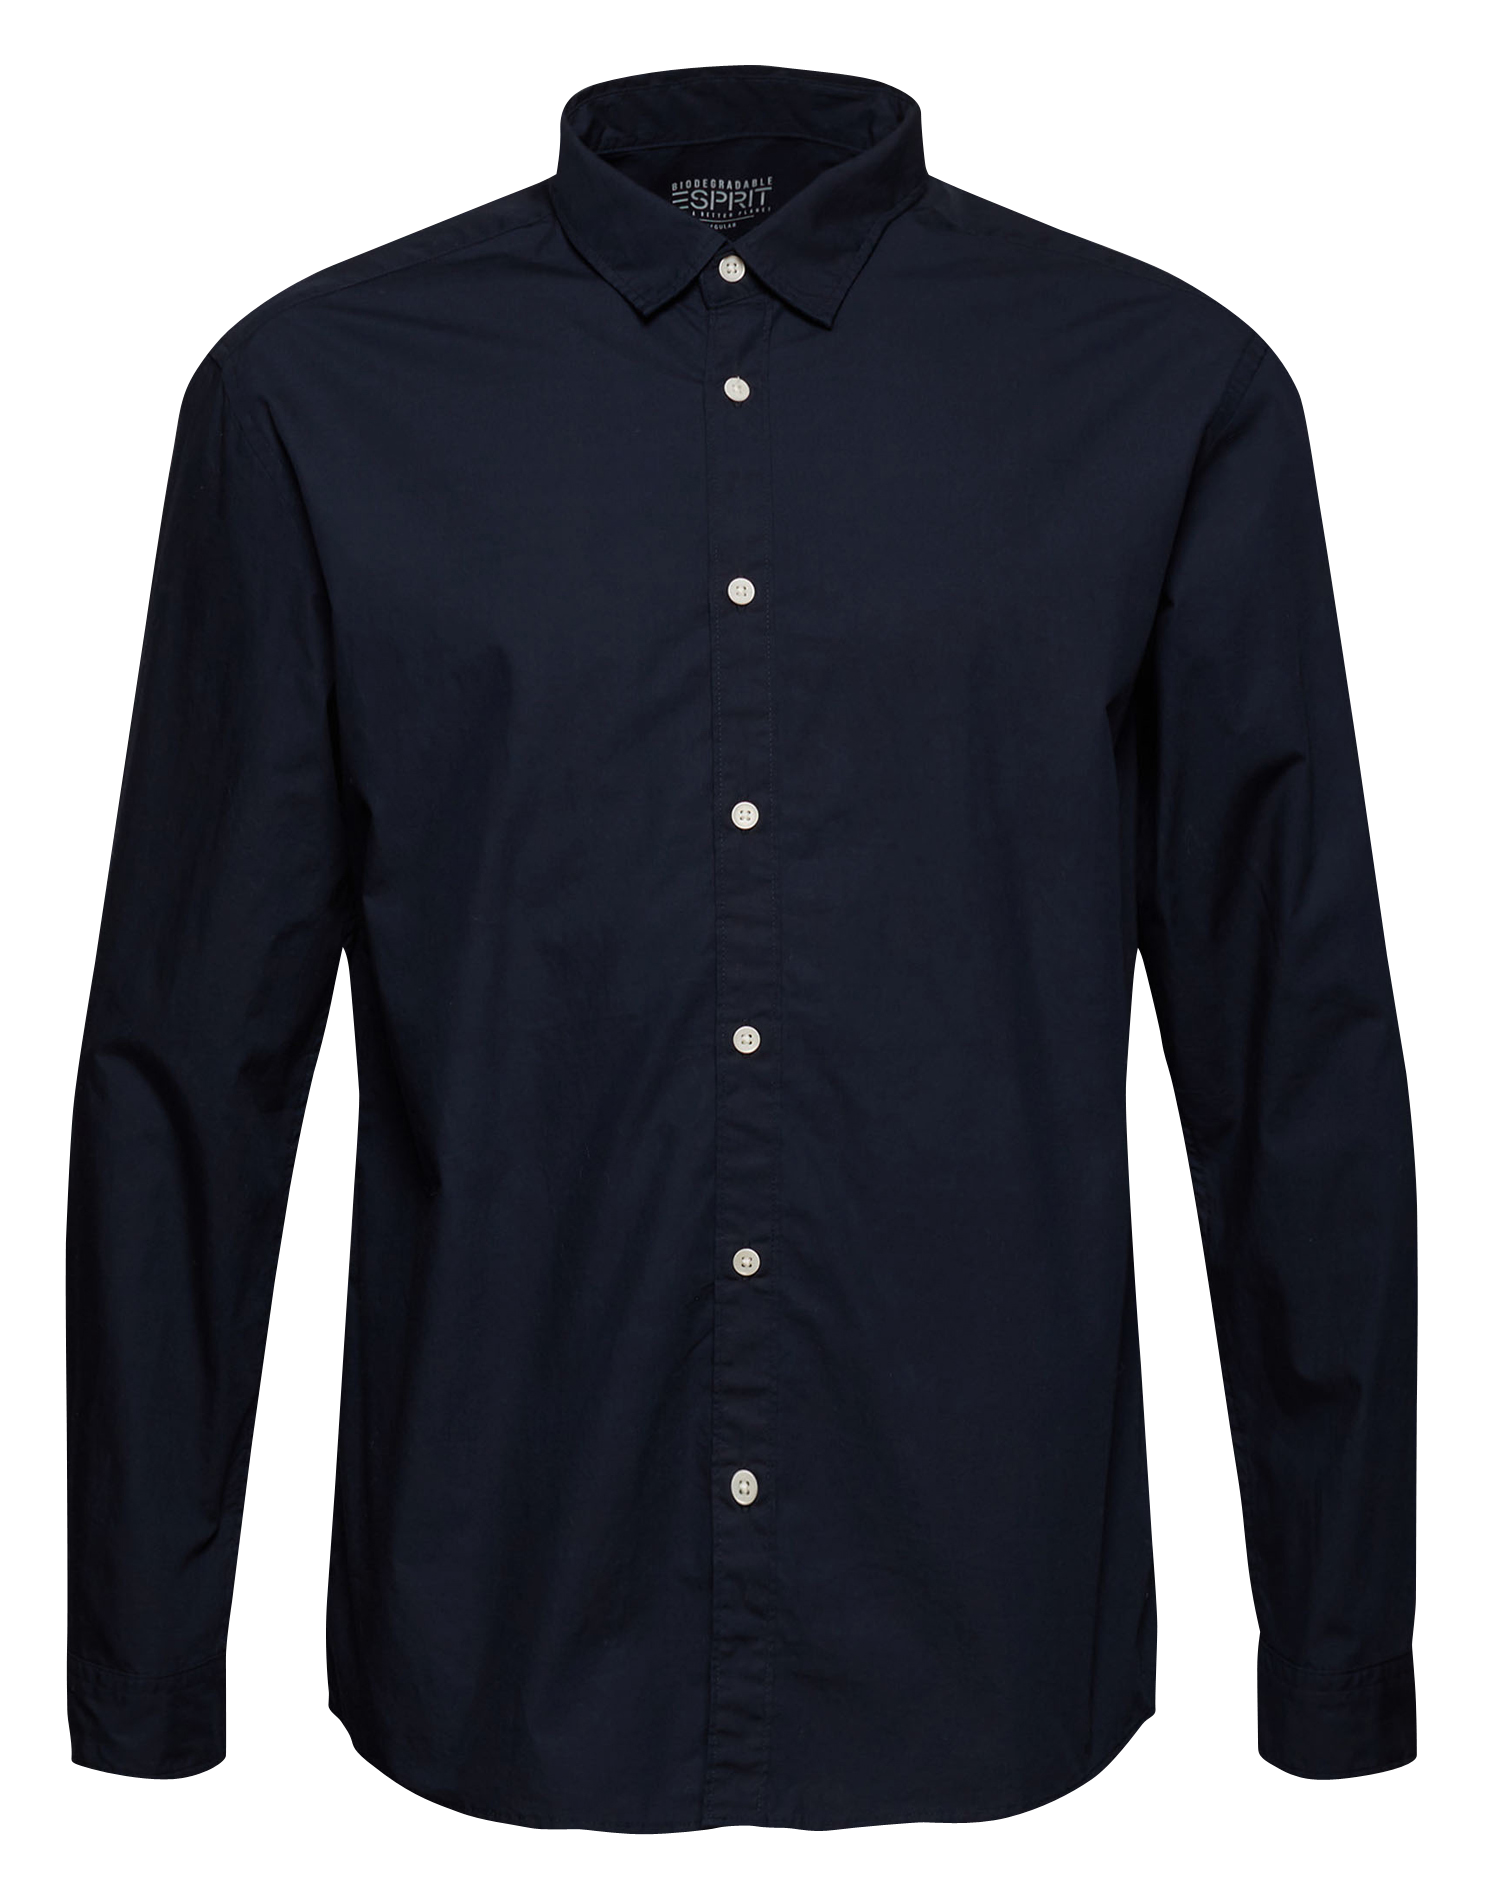 ESPRIT Mens Regular Long Sleeve Check Shirts Casual Cotton Shirt Bright Blue S 